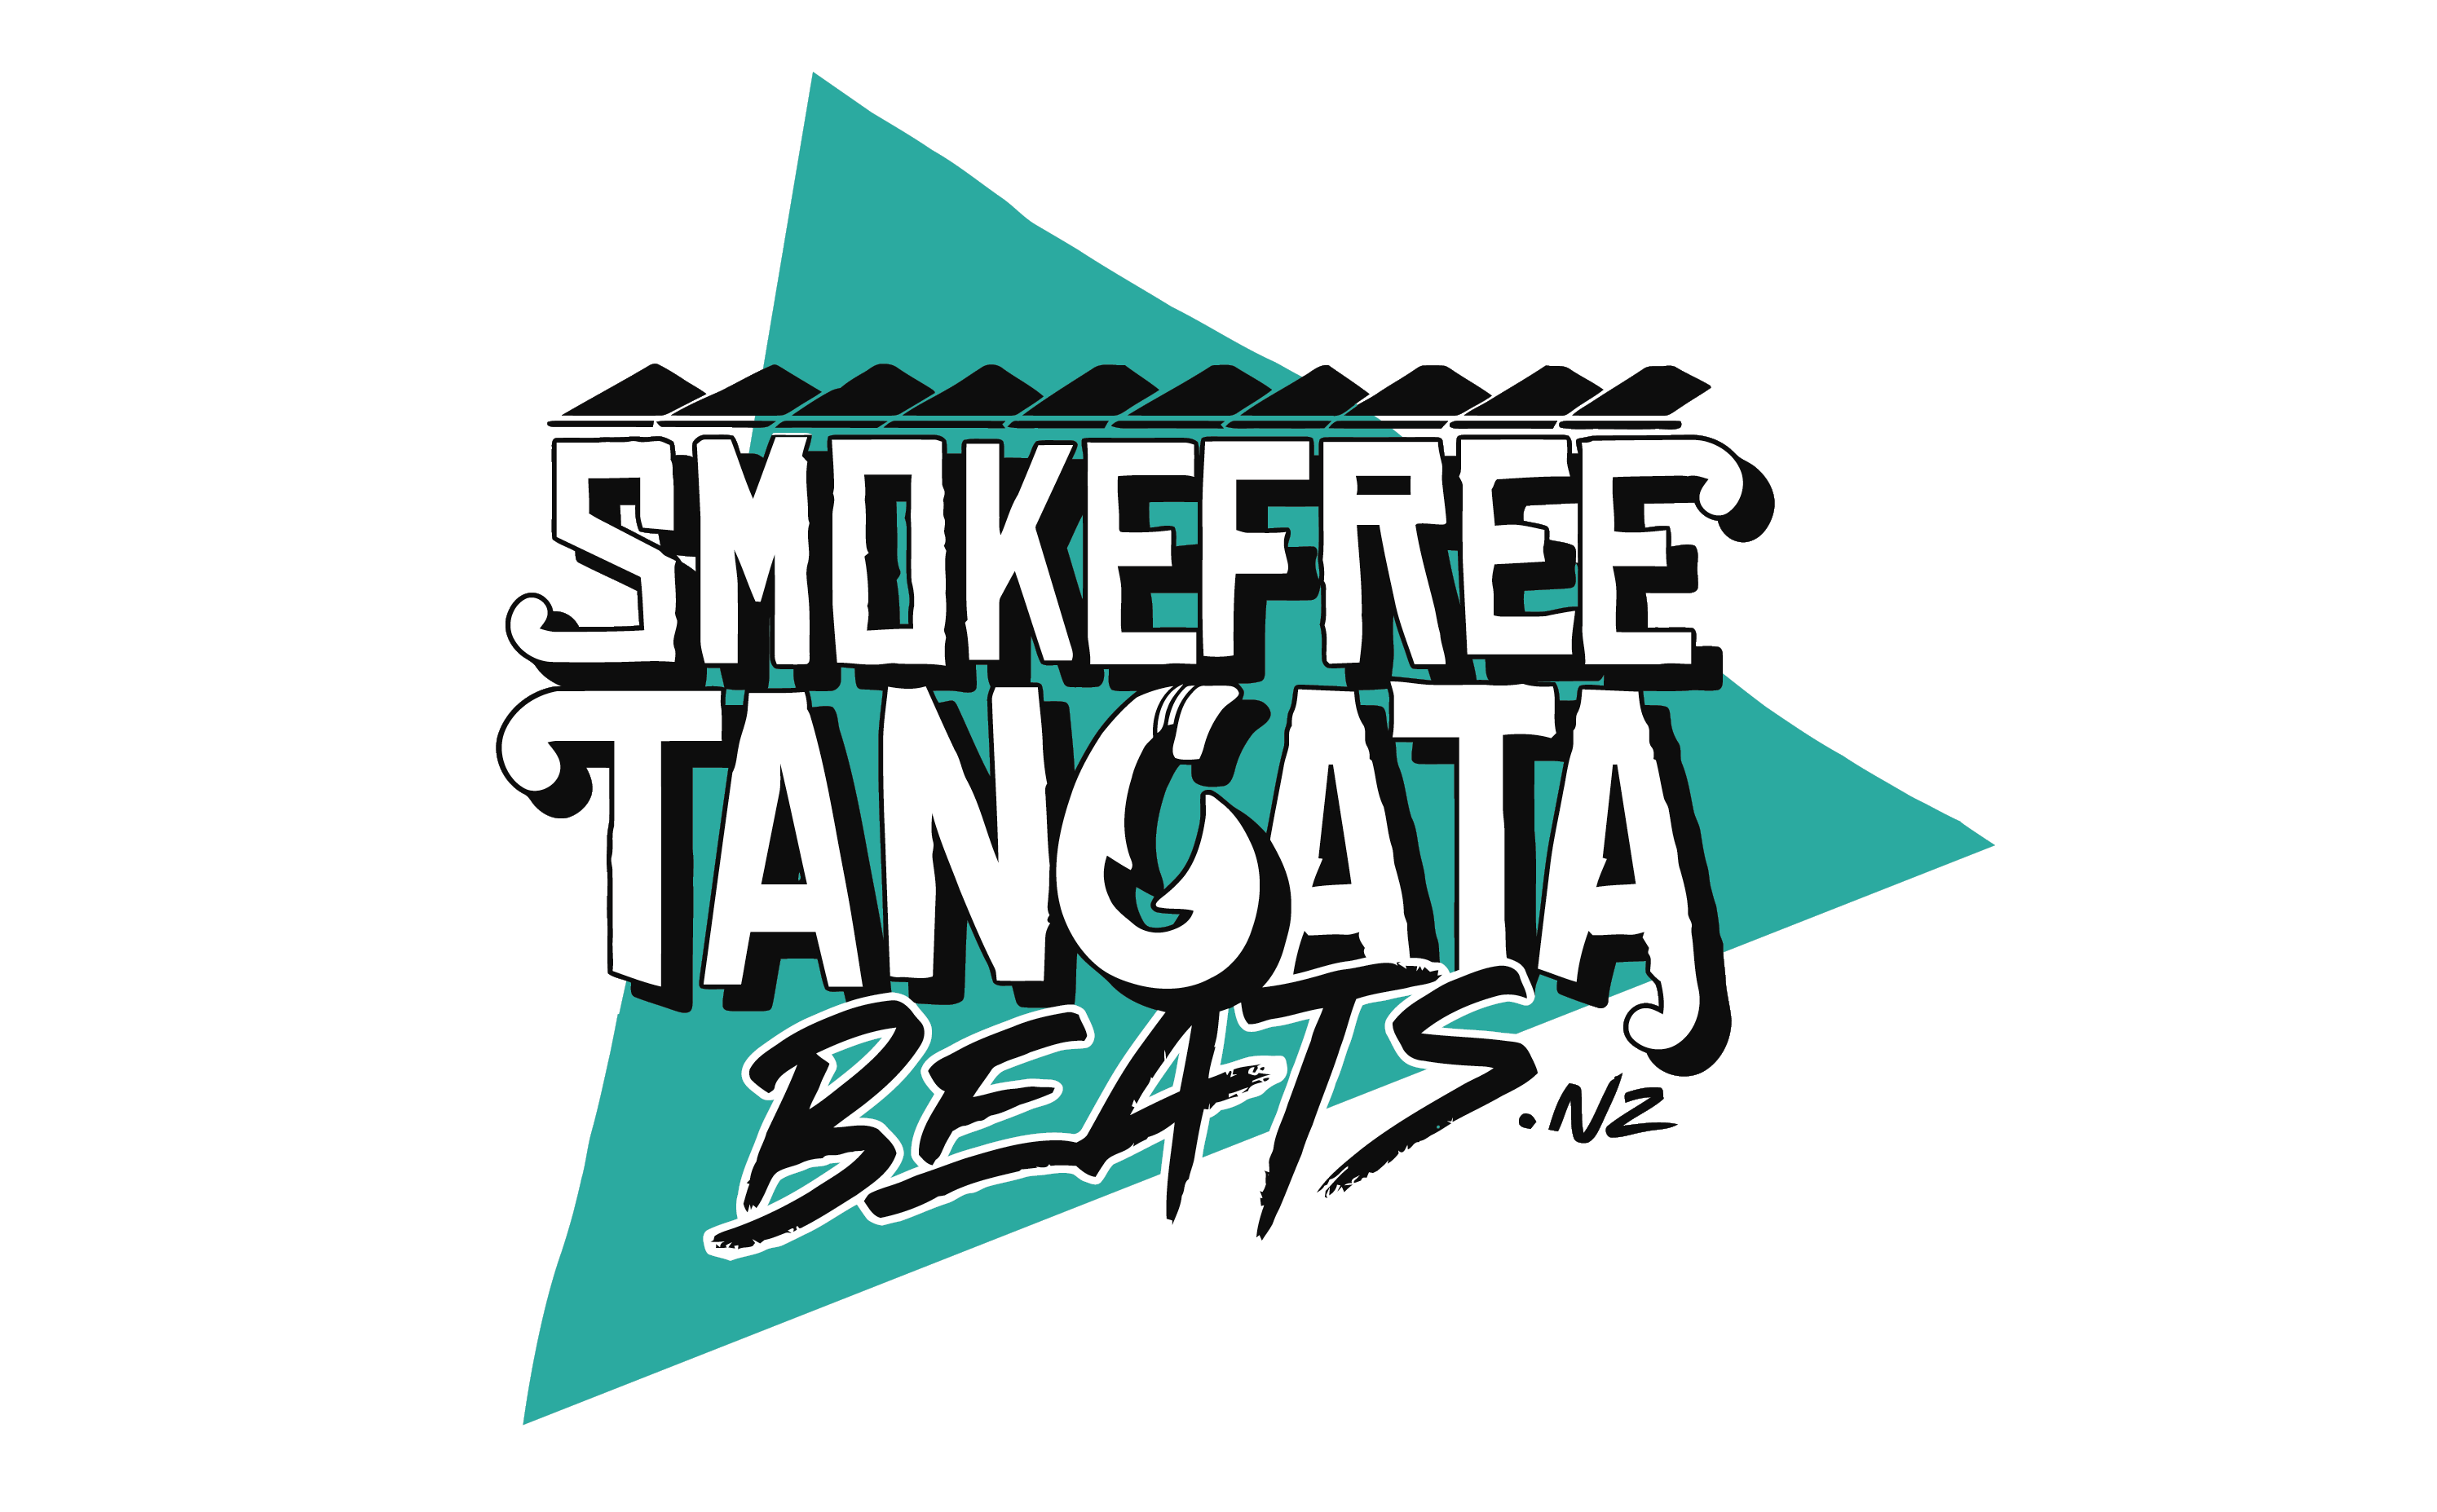 SMOKEFREE Tangata 22      + ..